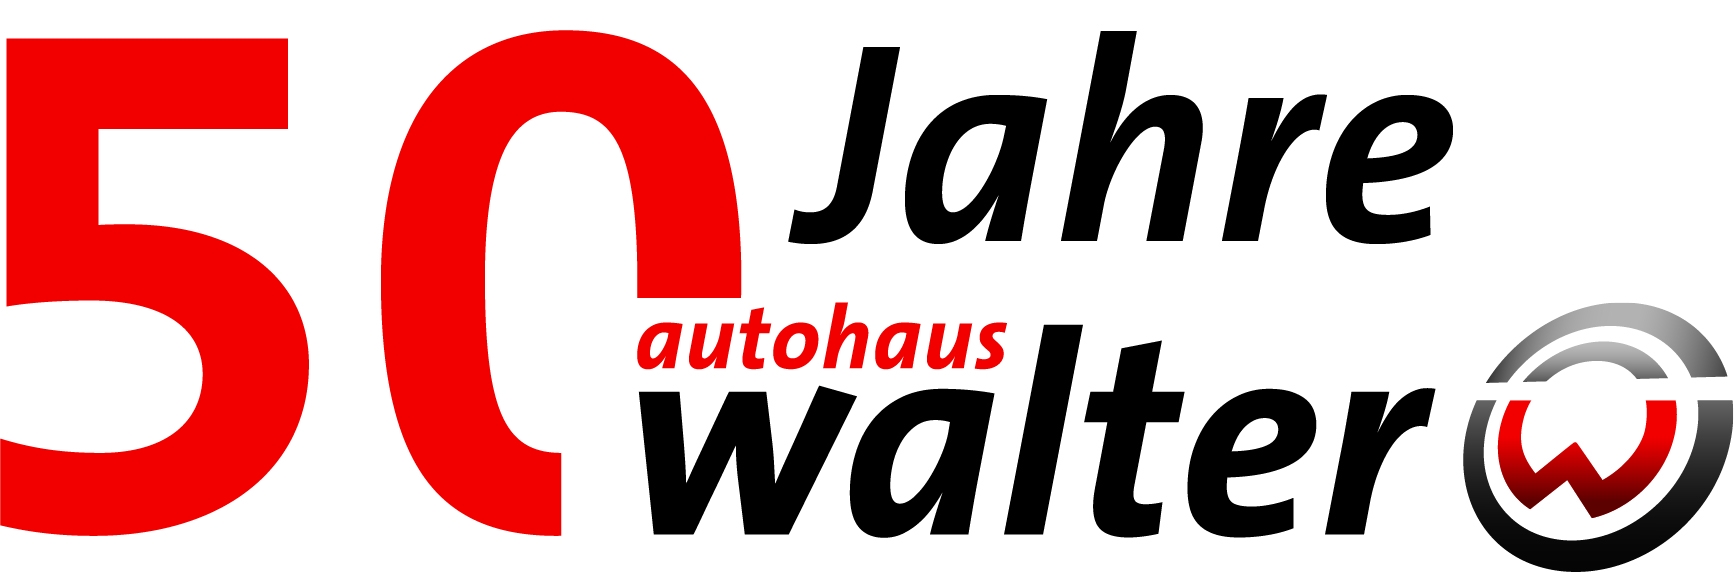 Foto - Autozentrum Walter GmbH % Co KG